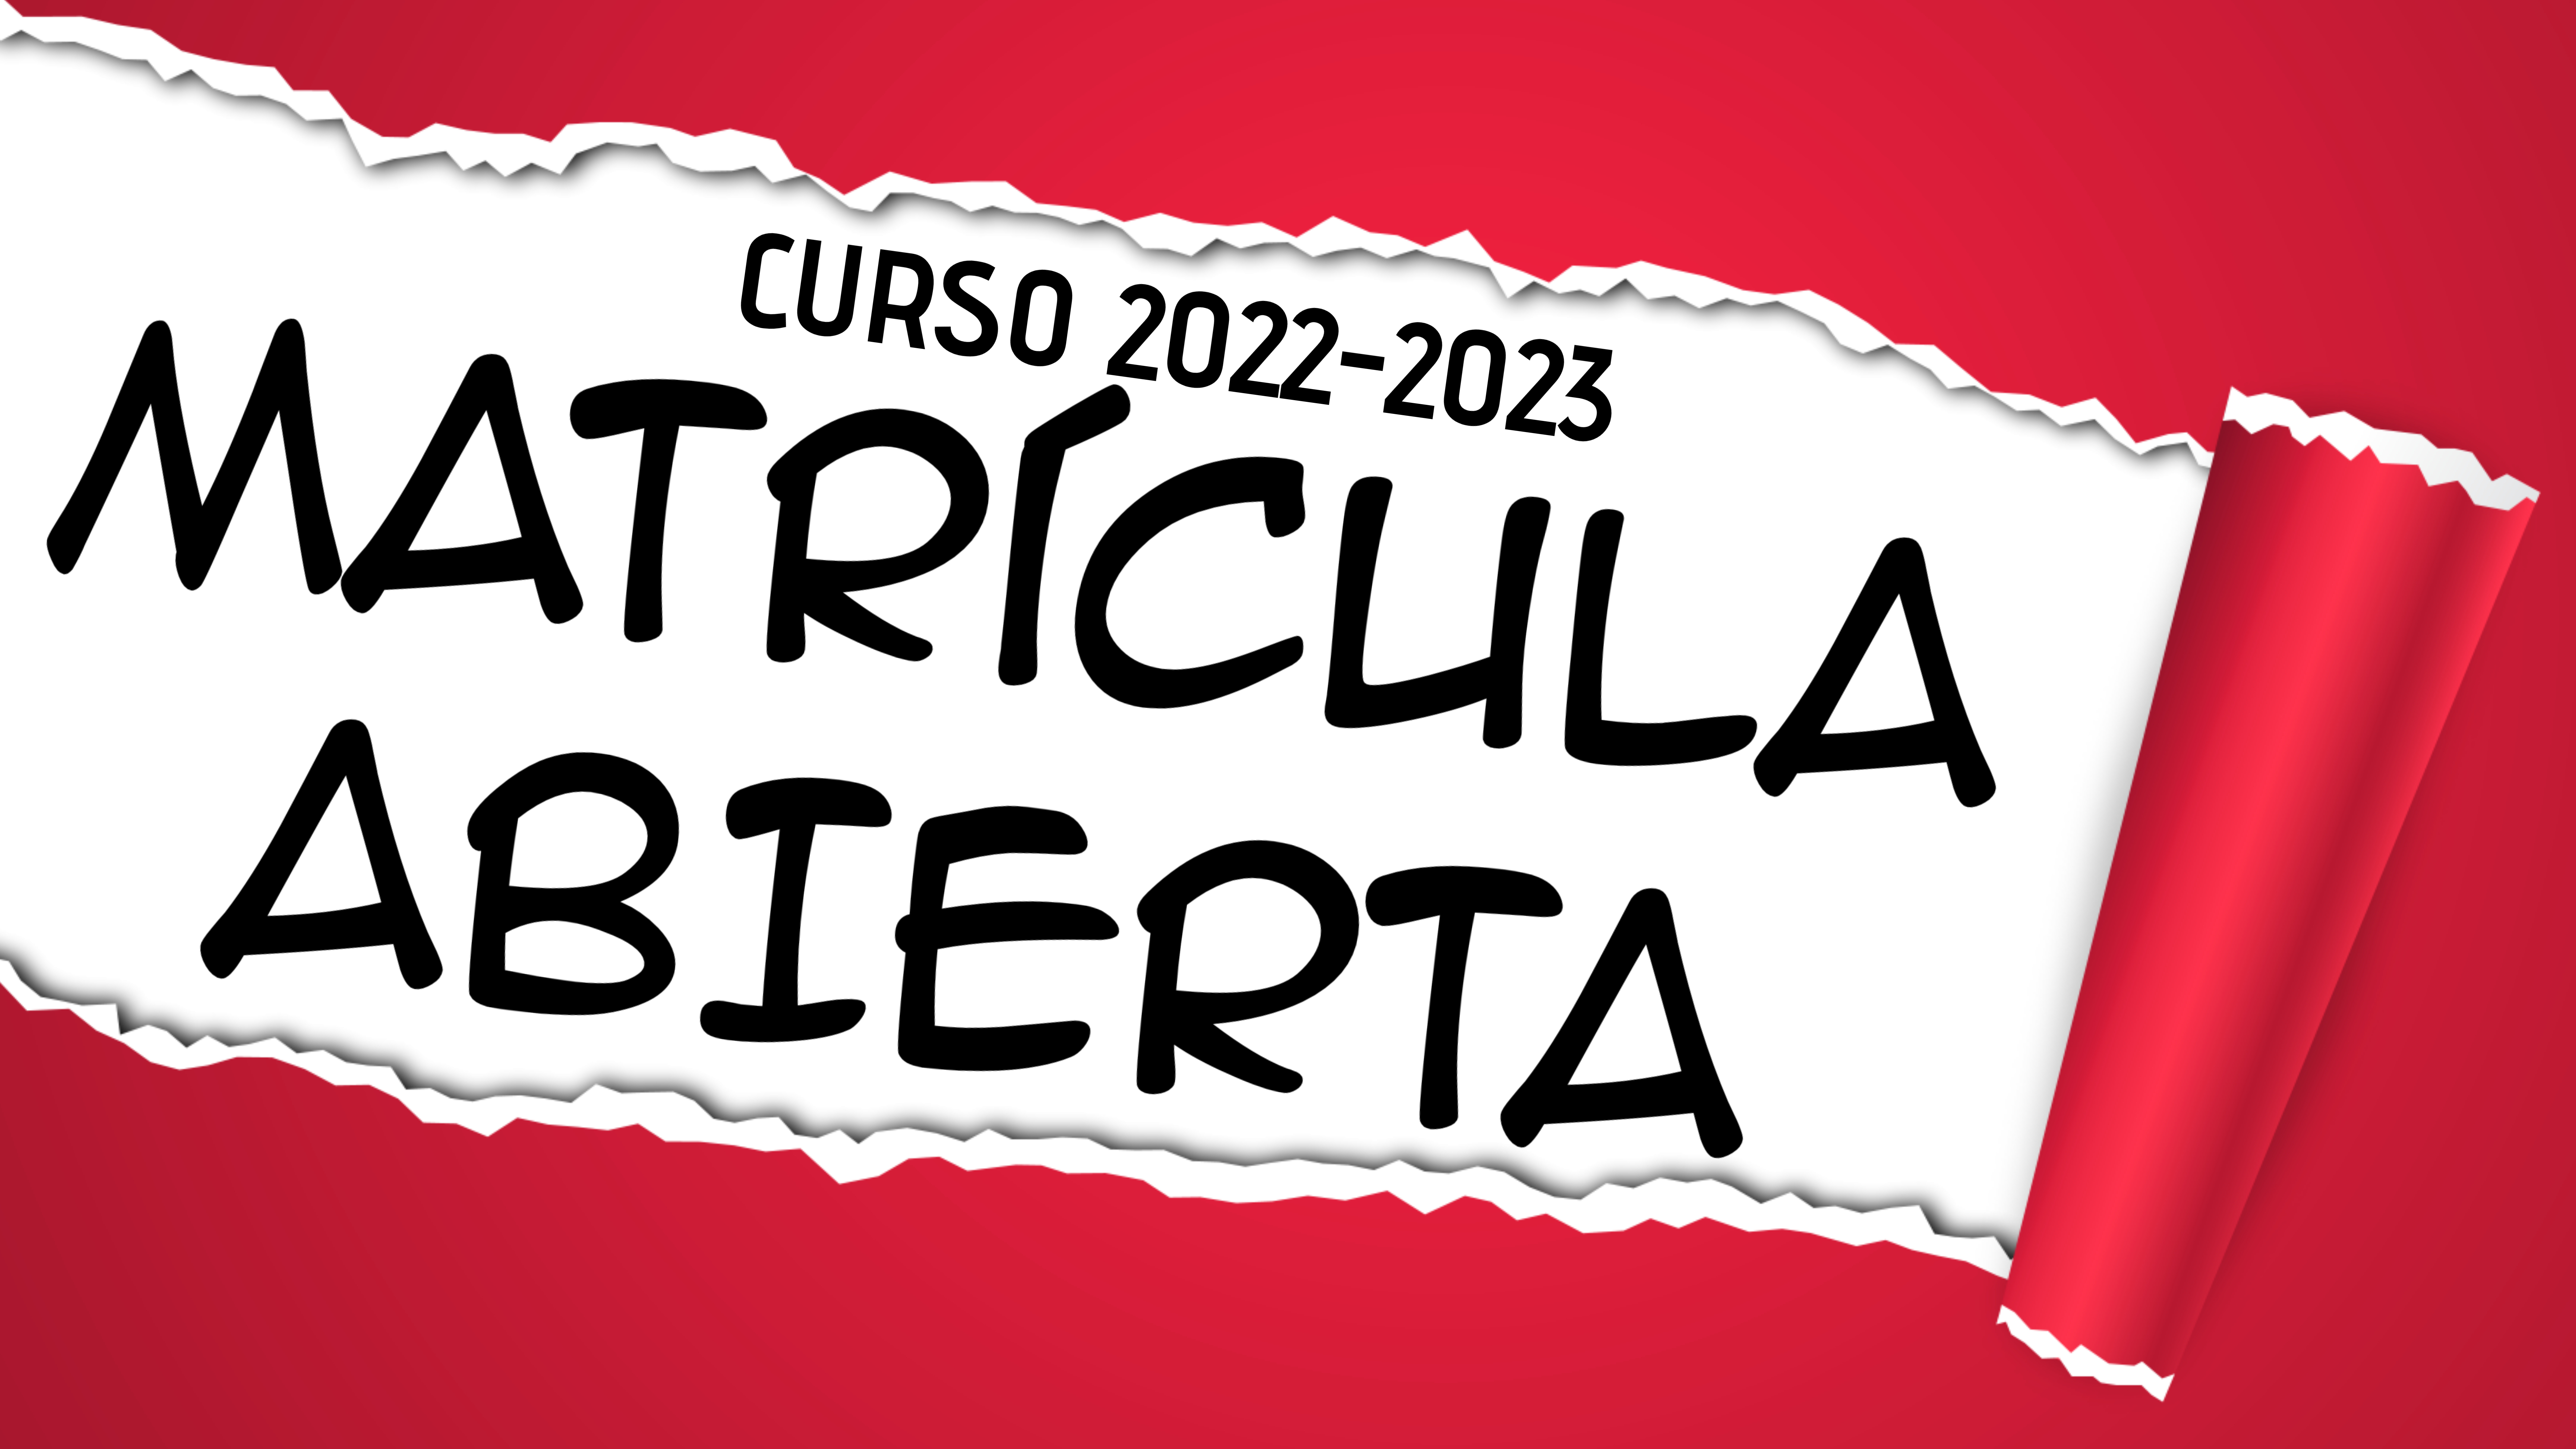 Matricula abierta 2022-2023